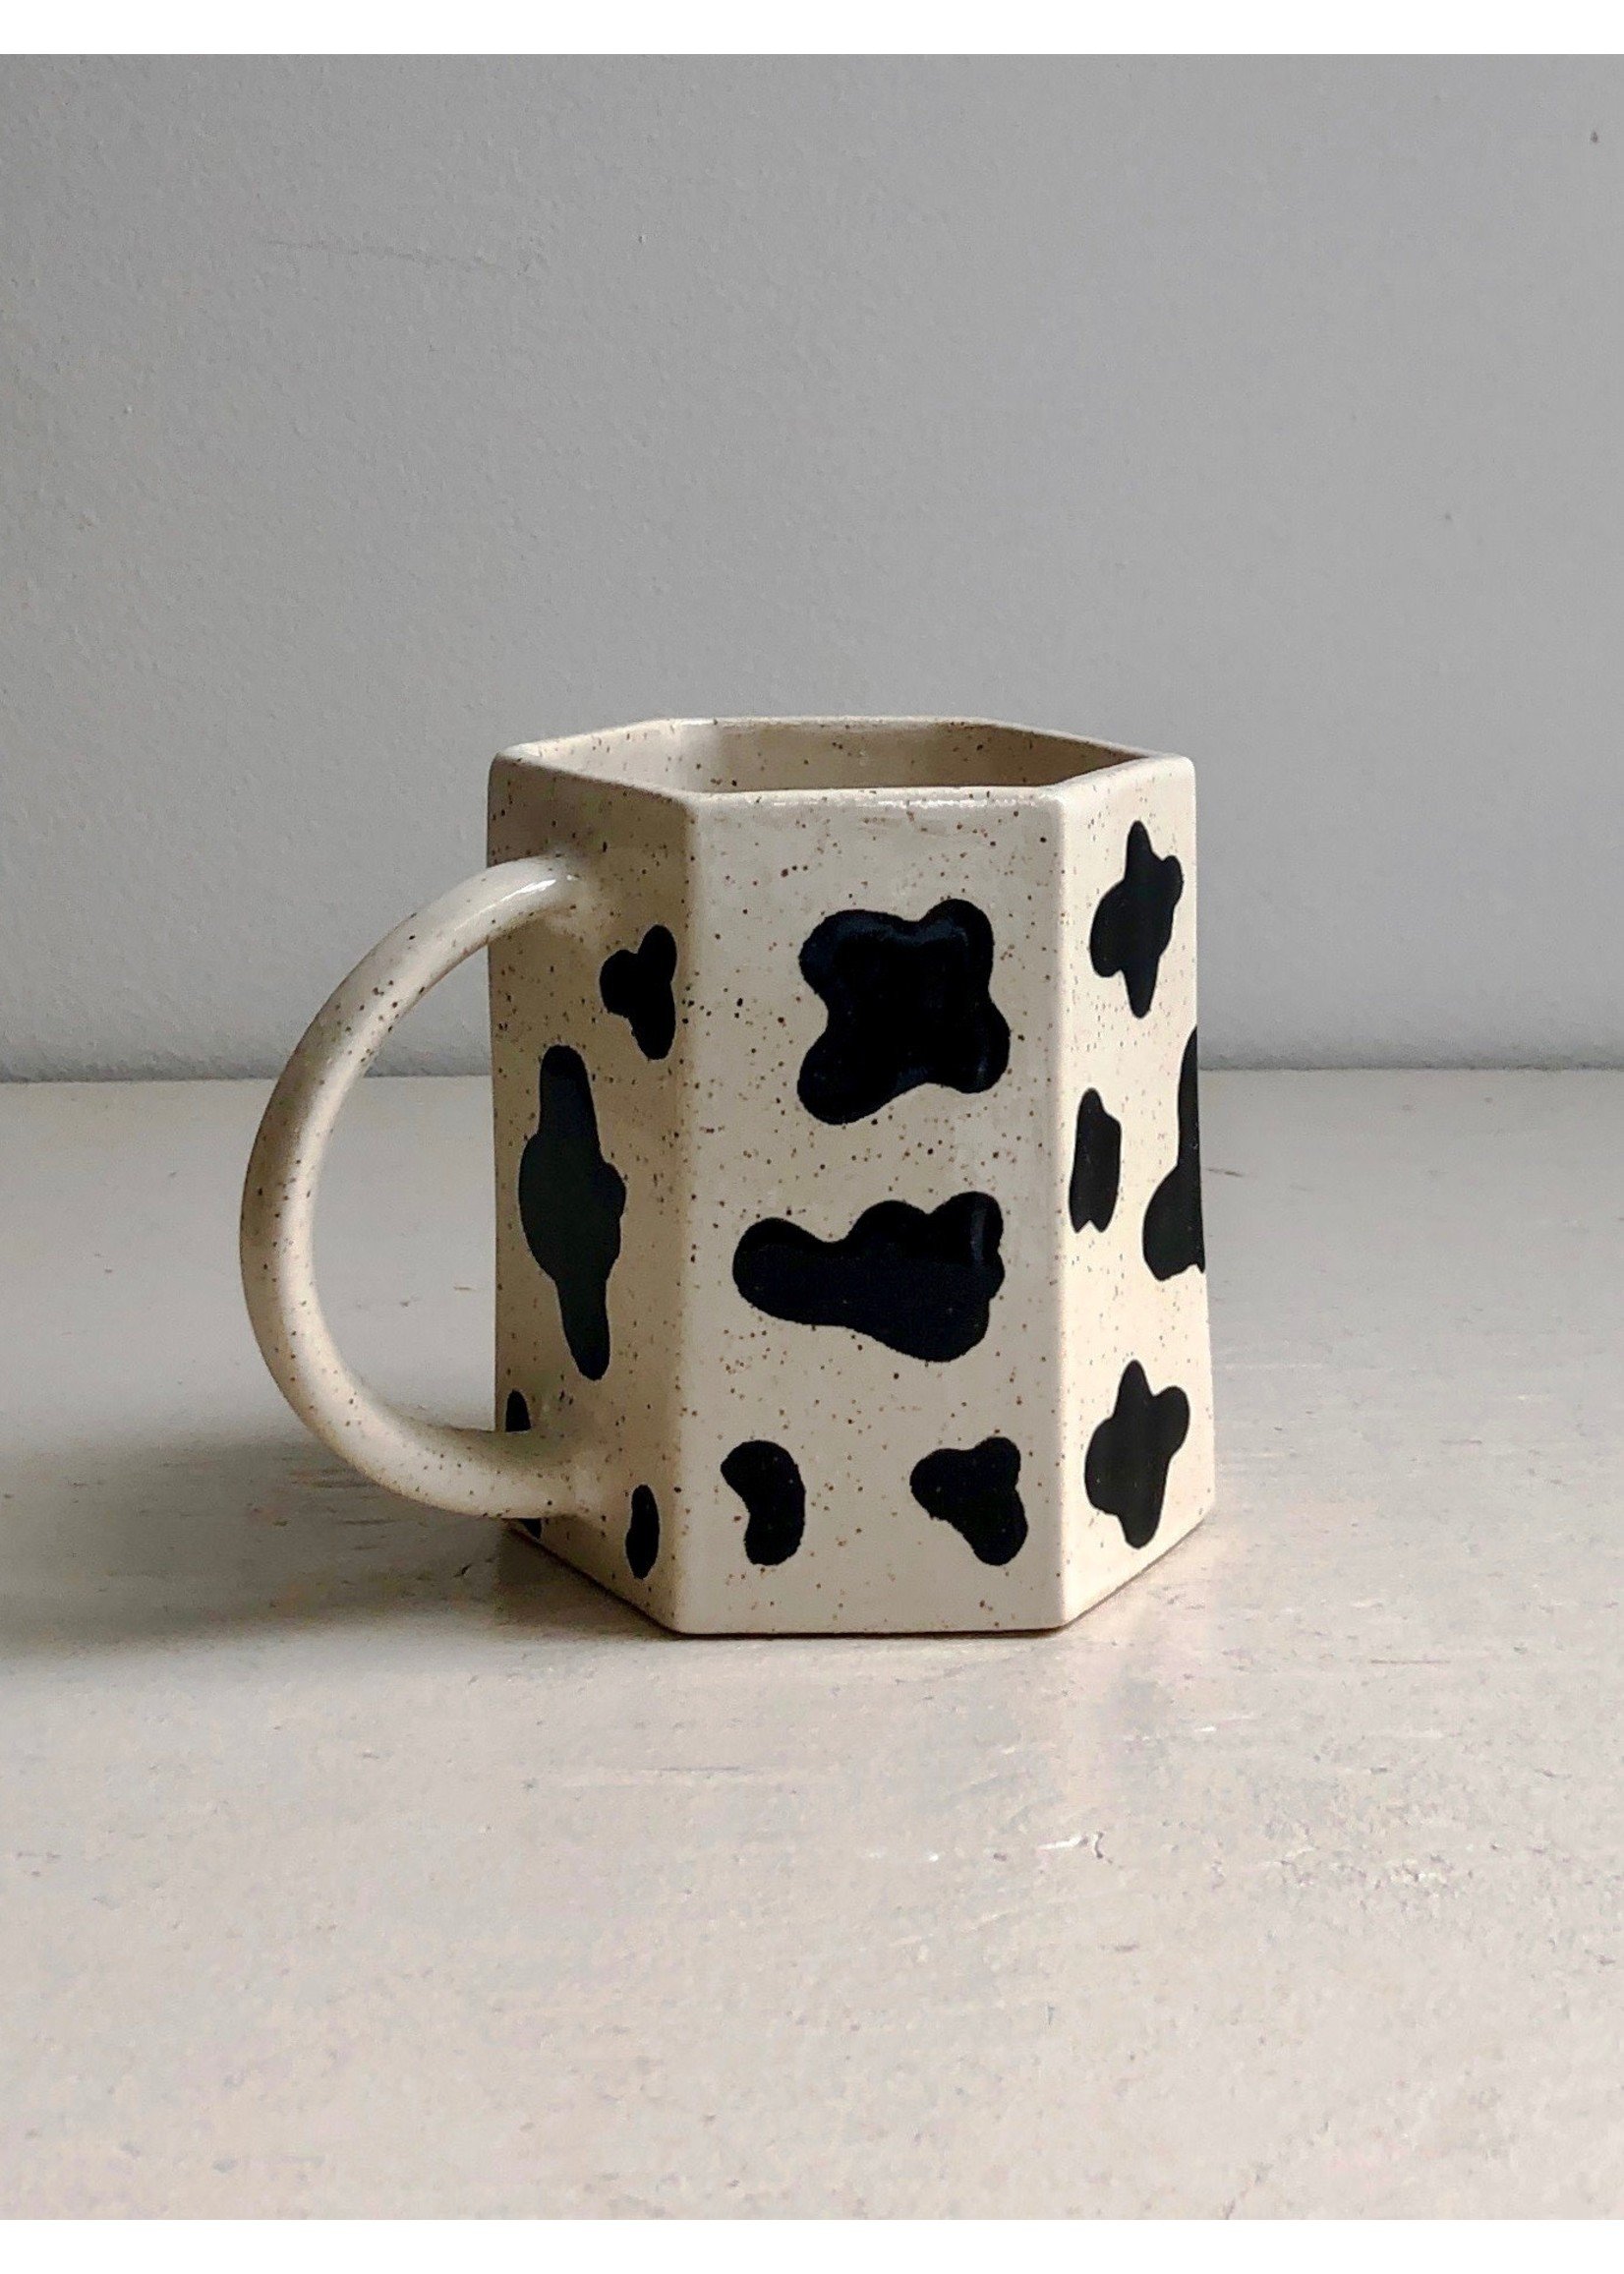 Lollipots Hexagon Ceramic Mugs by Lollipots